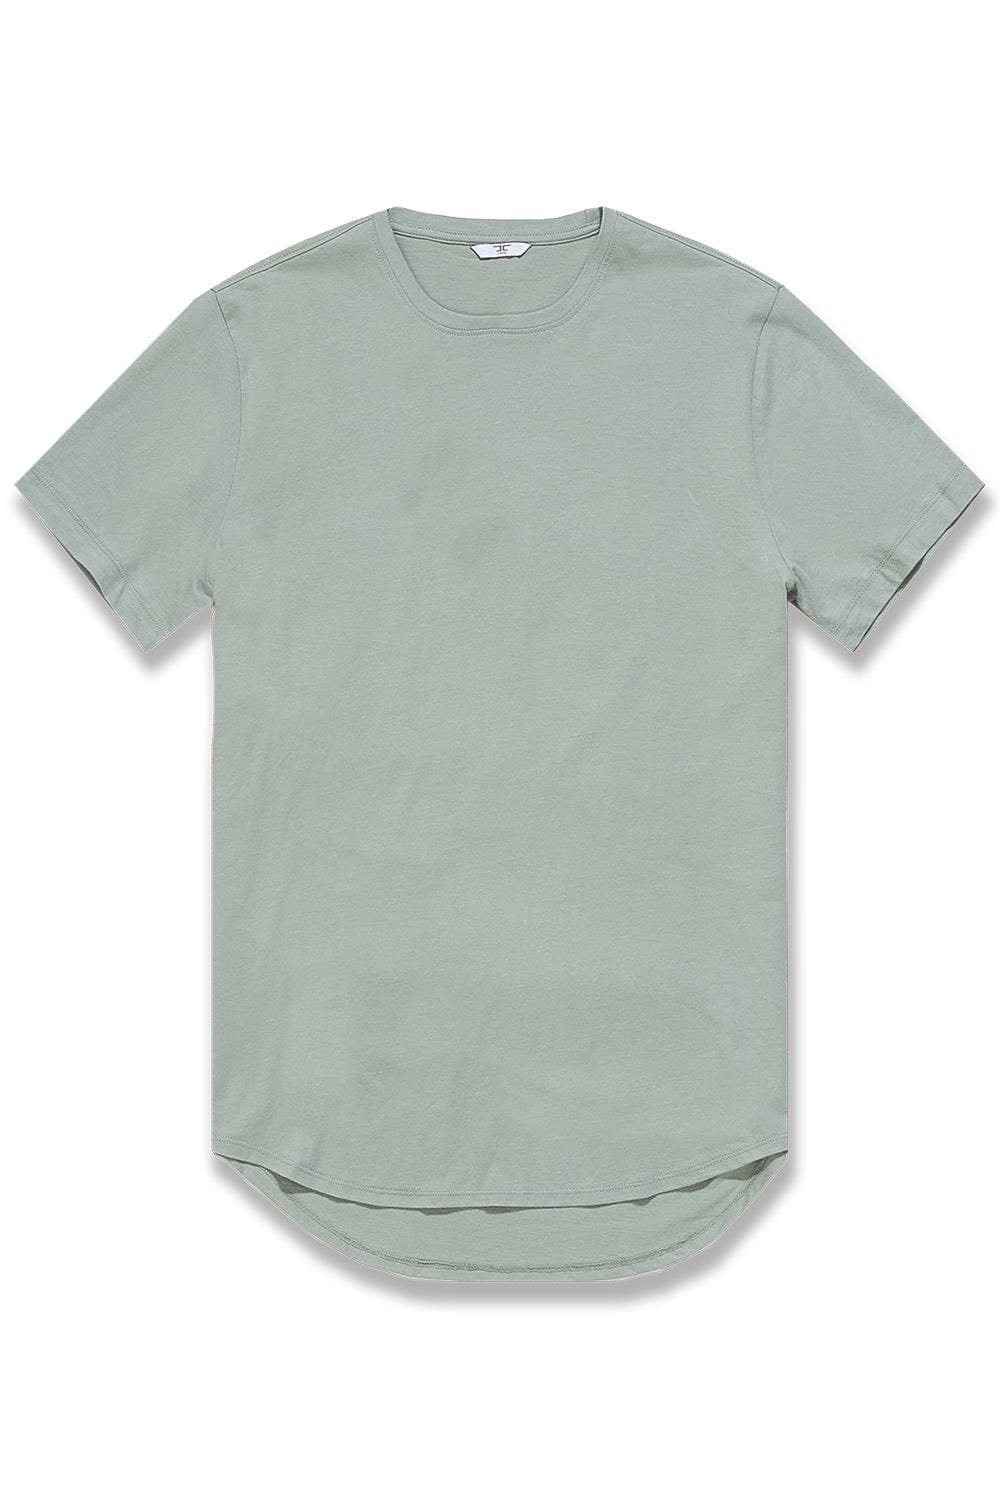 JC Big Men Big Men's Scallop T-Shirt (Spring Exclusives) Desert Sage / 4XL